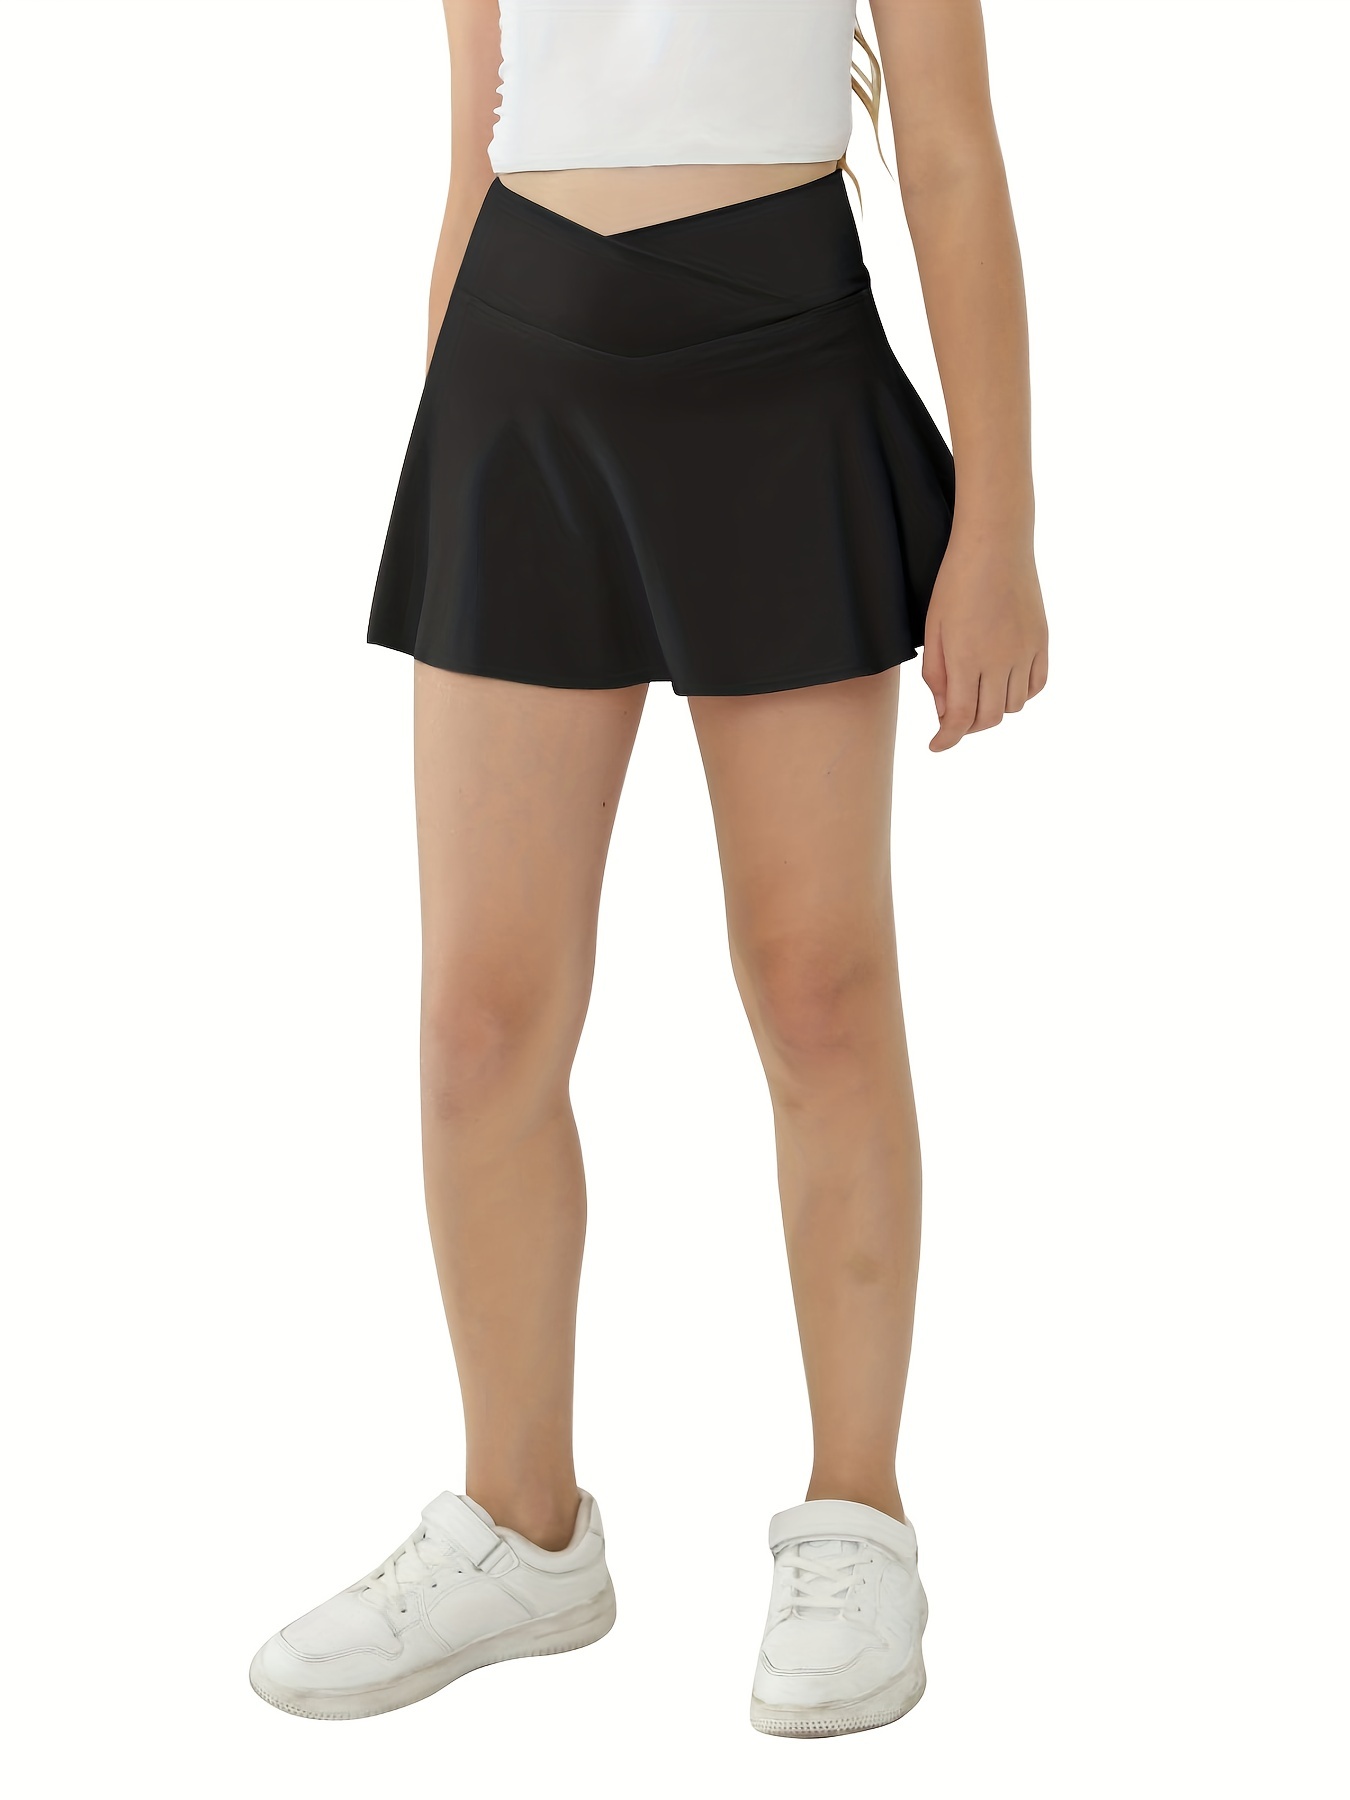 Reduce!Herrnalise Kids Teen Girls Tennis Skirt Pleated Golf Athletic Skort  Summer Sports Shorts Gym Running Biker Tennis Short Skirt with Pocket Black  